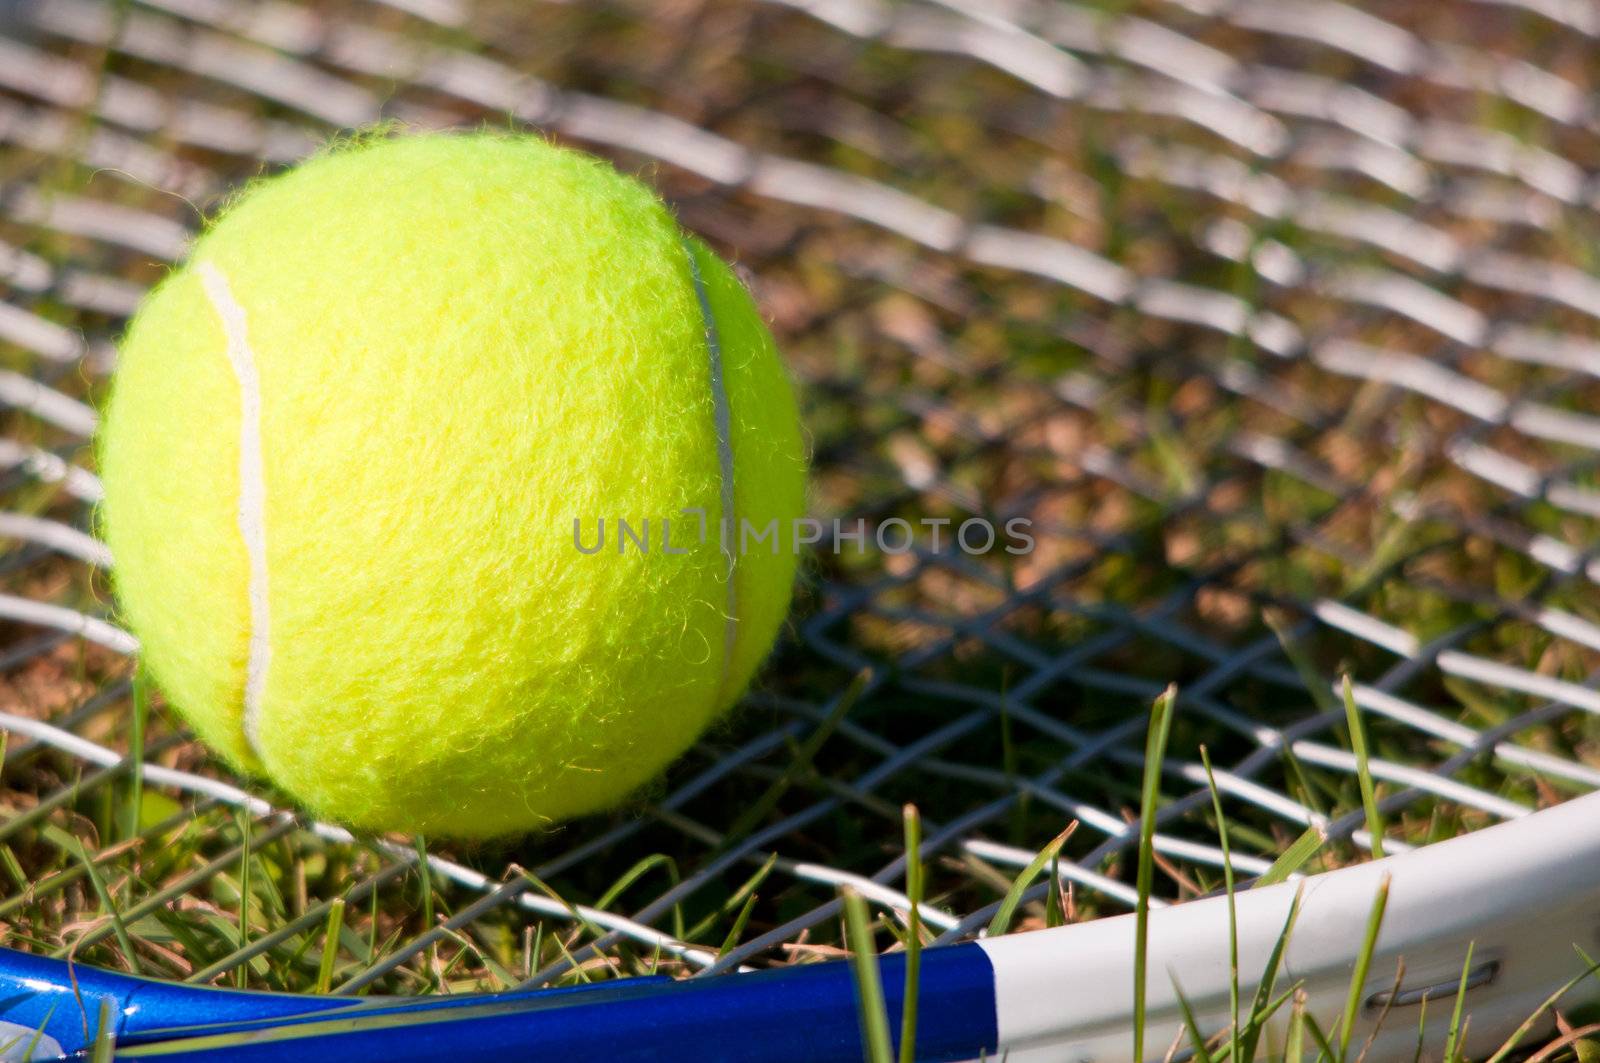 Tenis ball and racquet on grass